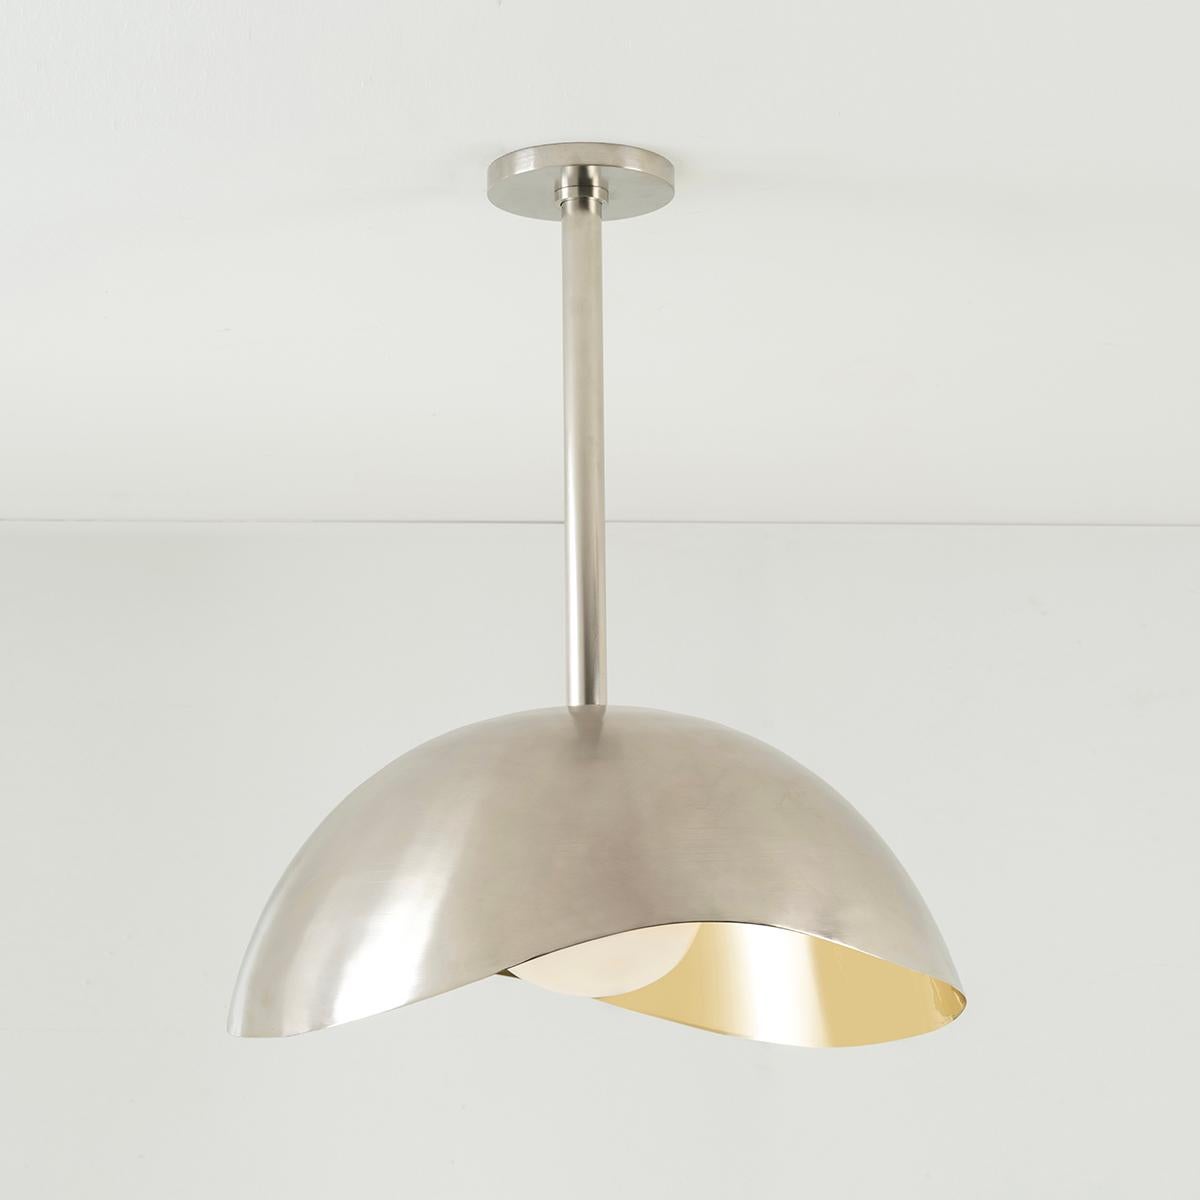 Contemporary Perla Grande Ceiling Light - Polished Brass Interior and Satin Nickel Exterior For Sale